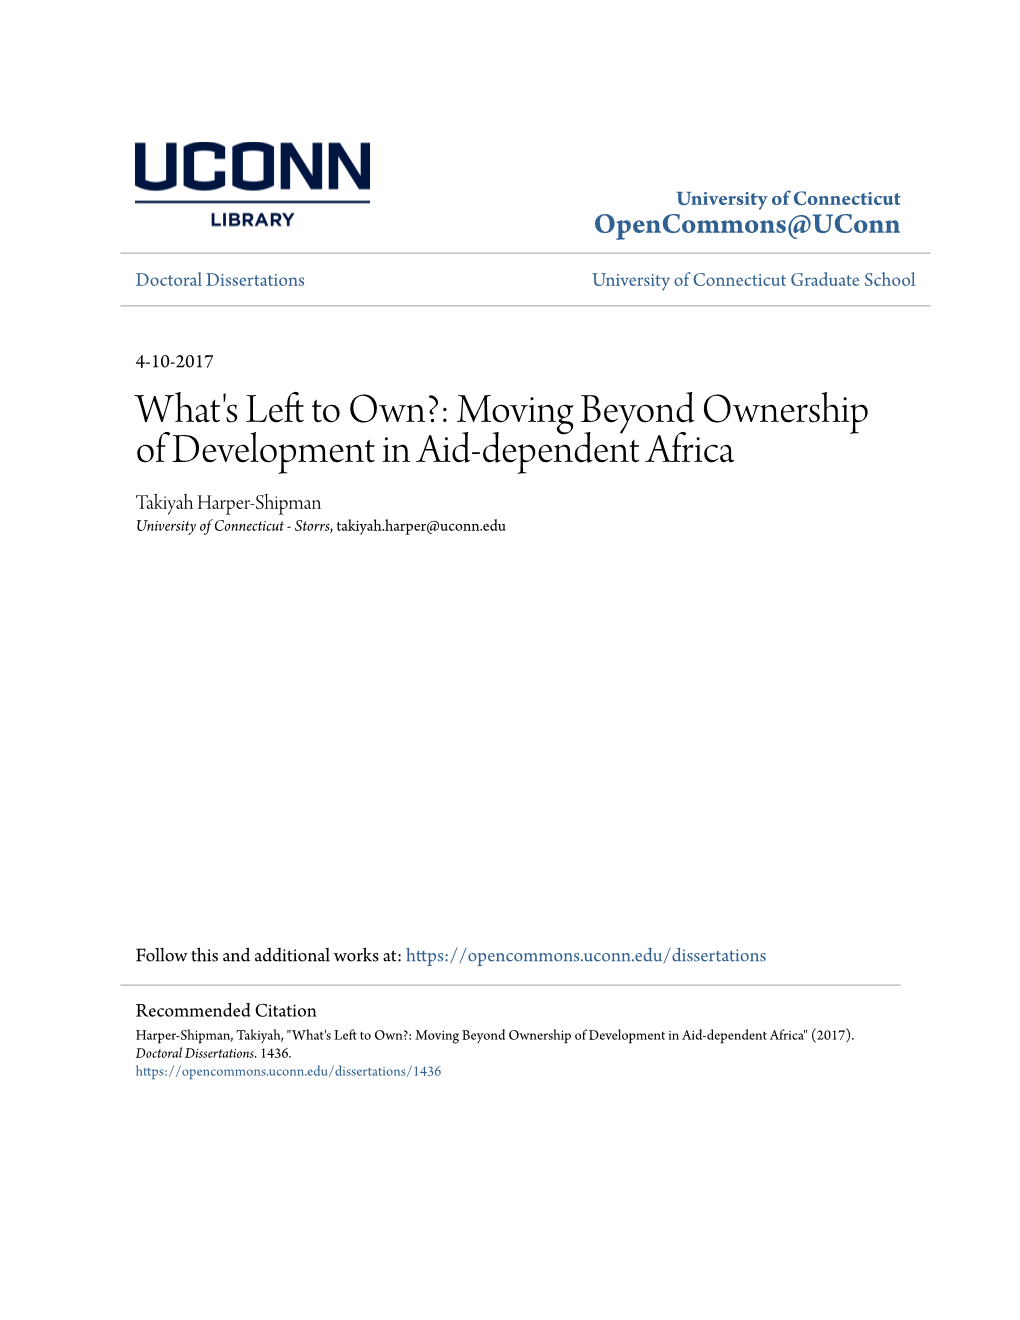 Moving Beyond Ownership of Development in Aid-Dependent Africa Takiyah Harper-Shipman University of Connecticut - Storrs, Takiyah.Harper@Uconn.Edu